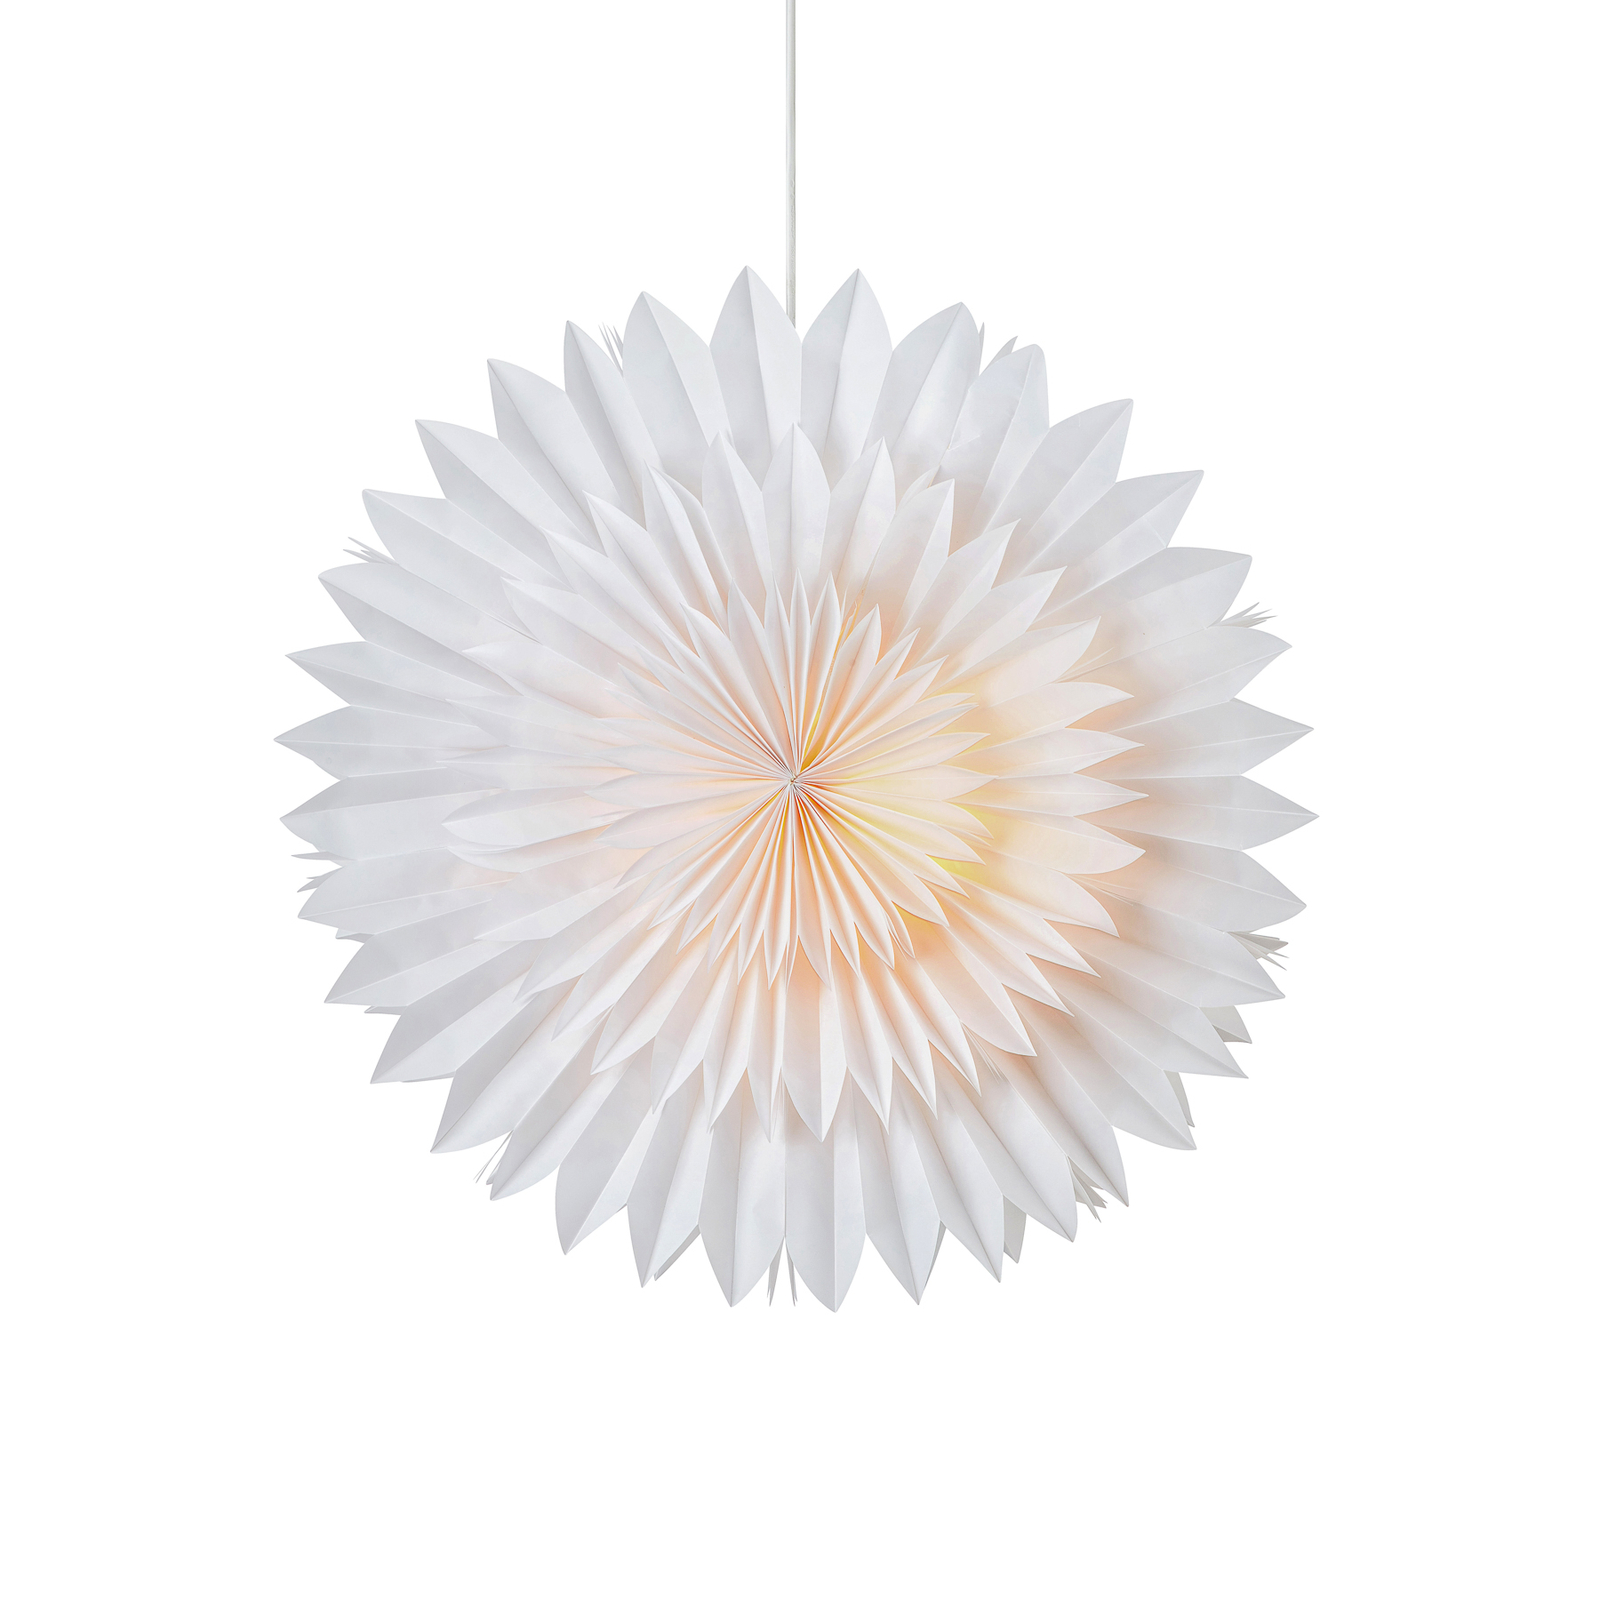 Solina decorative star, hanging, white, Ø 60 cm